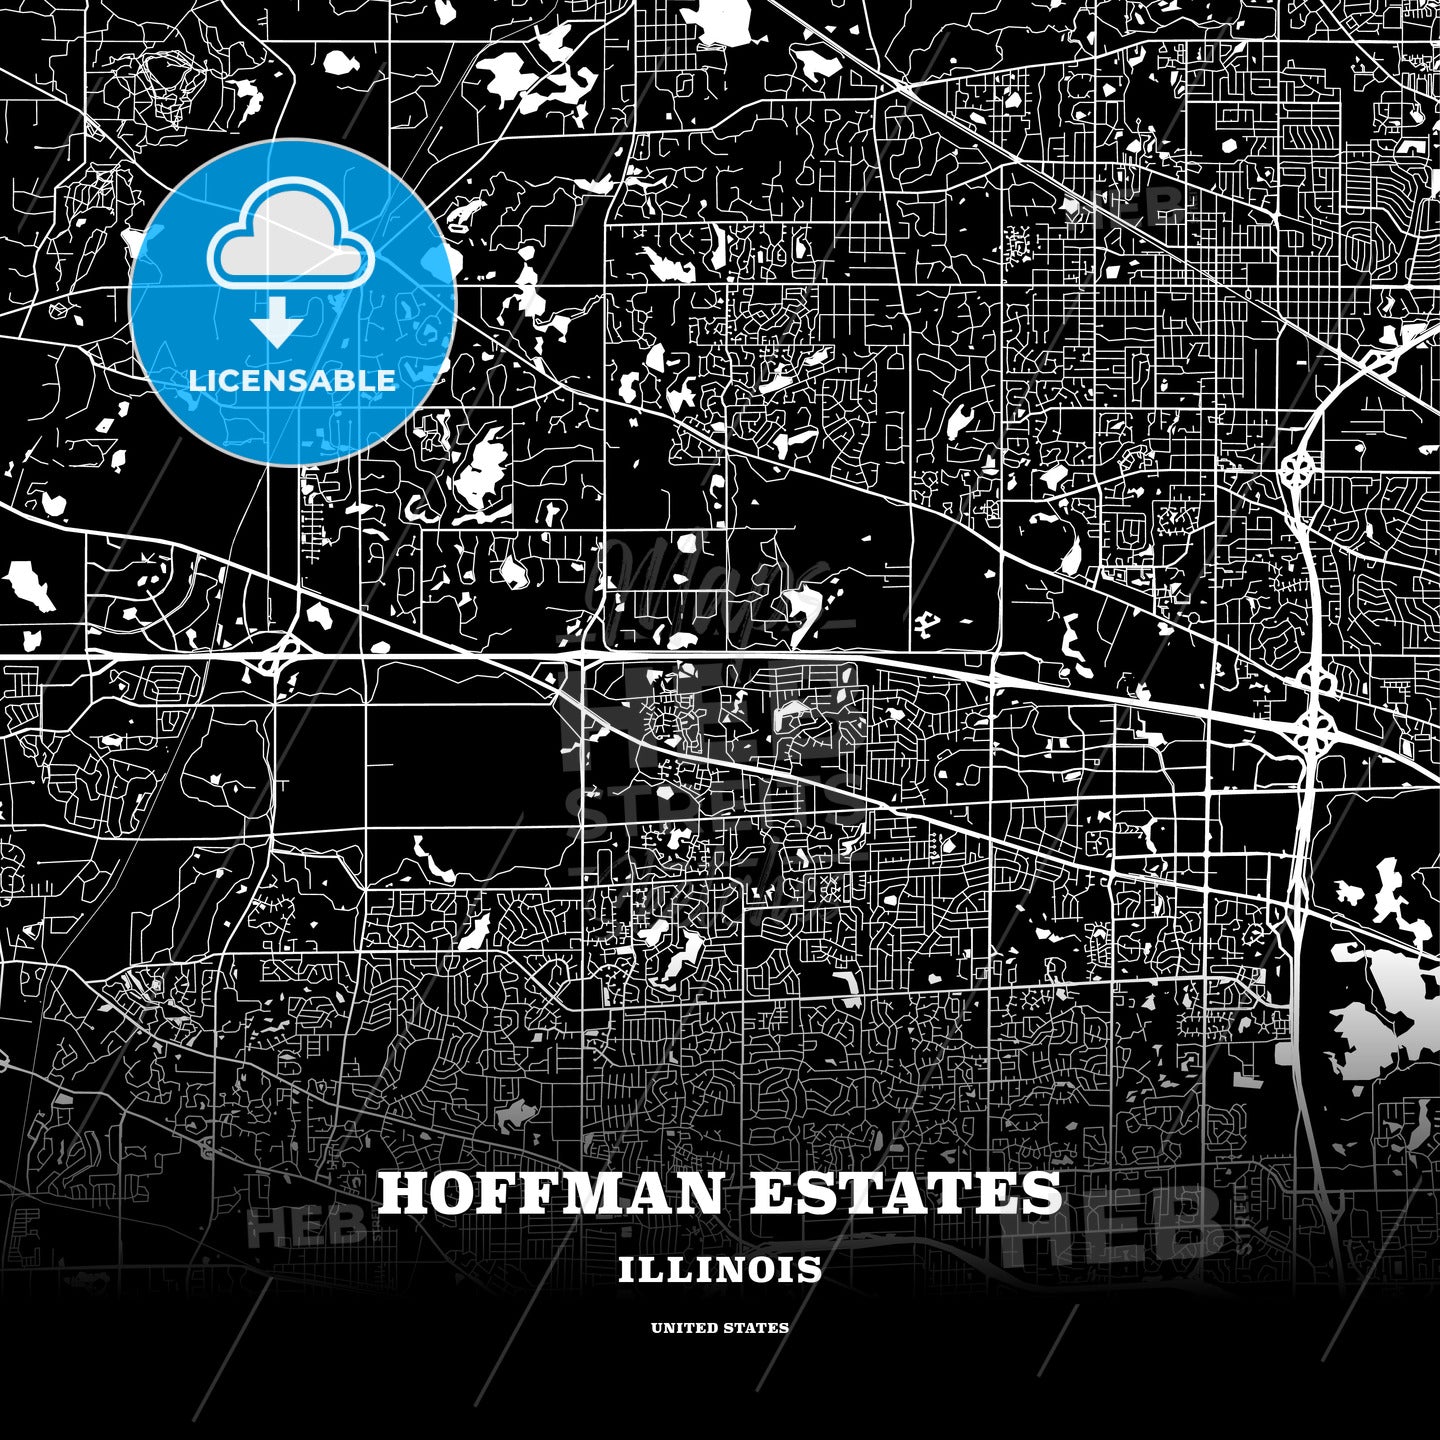 Hoffman Estates, Illinois, USA map